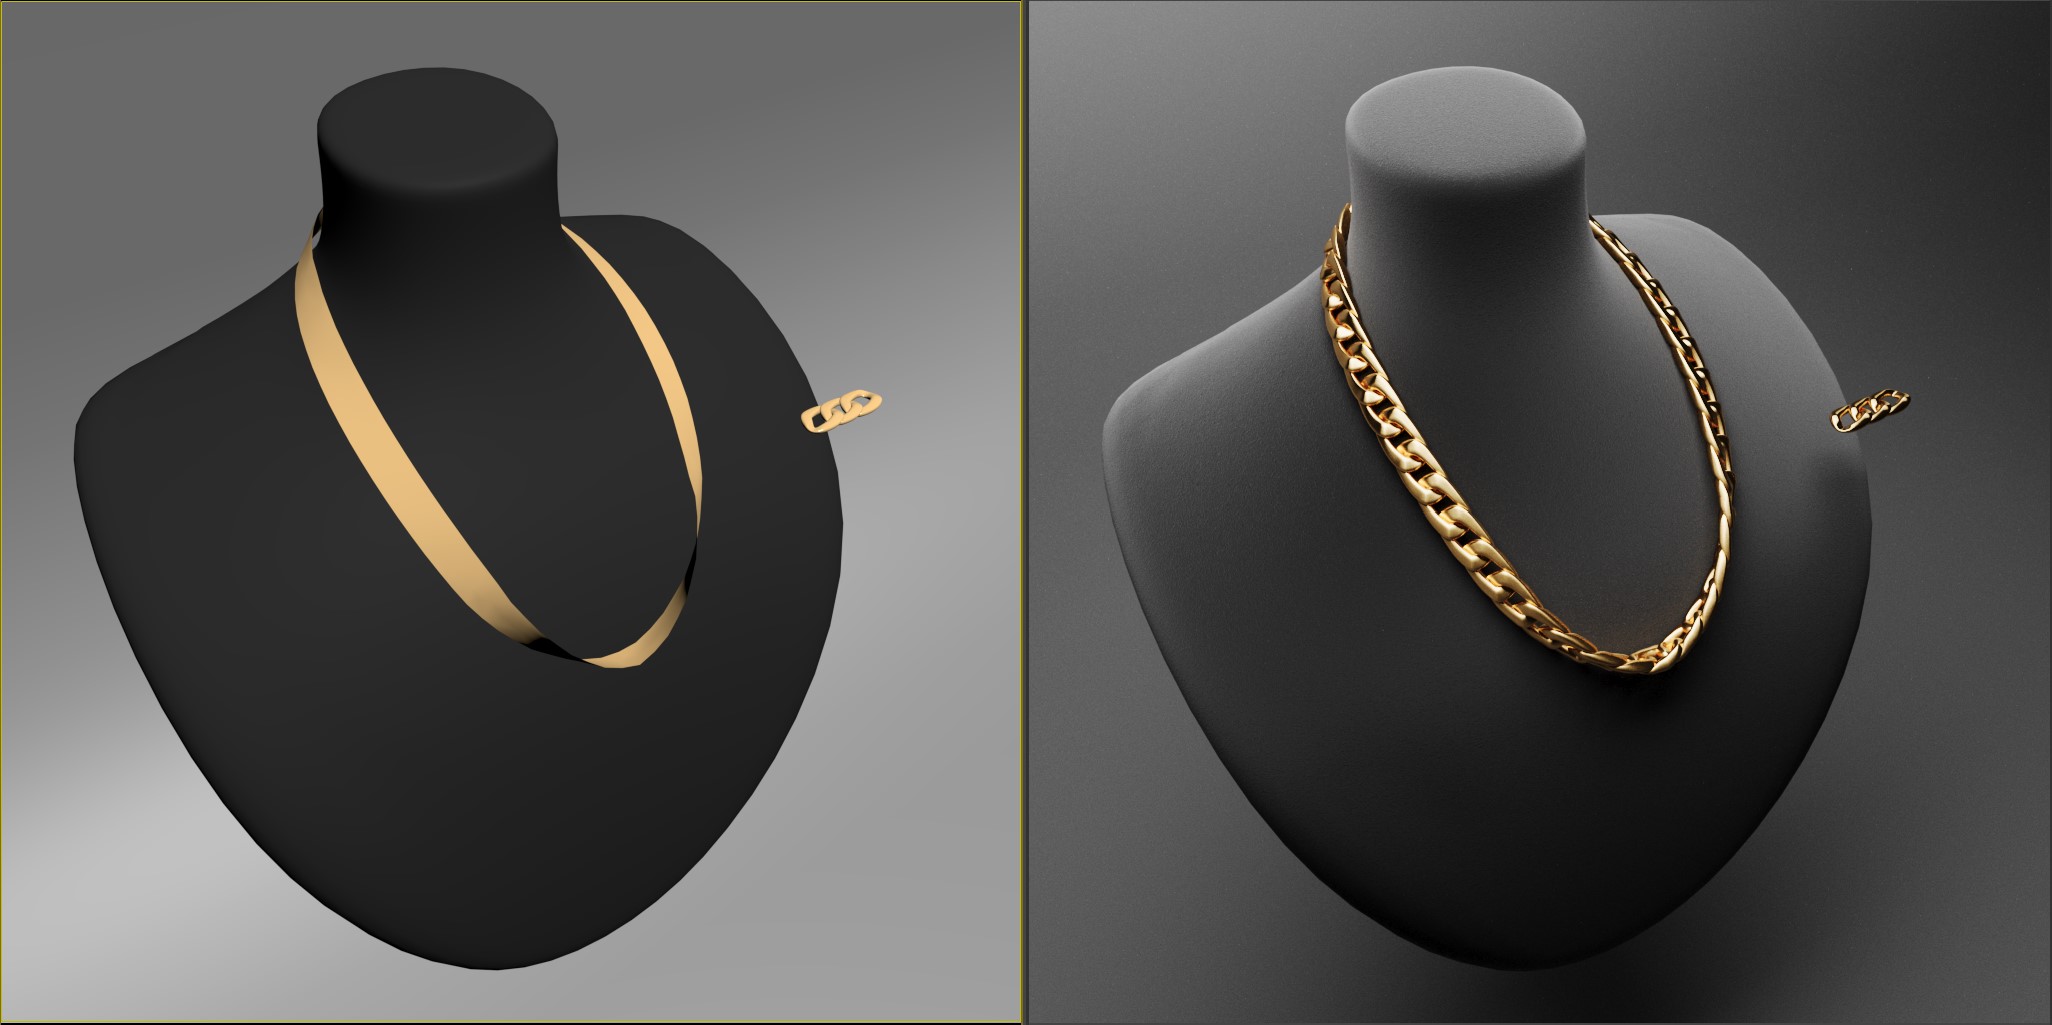 corona 9 pattern jewelry example 5cab3